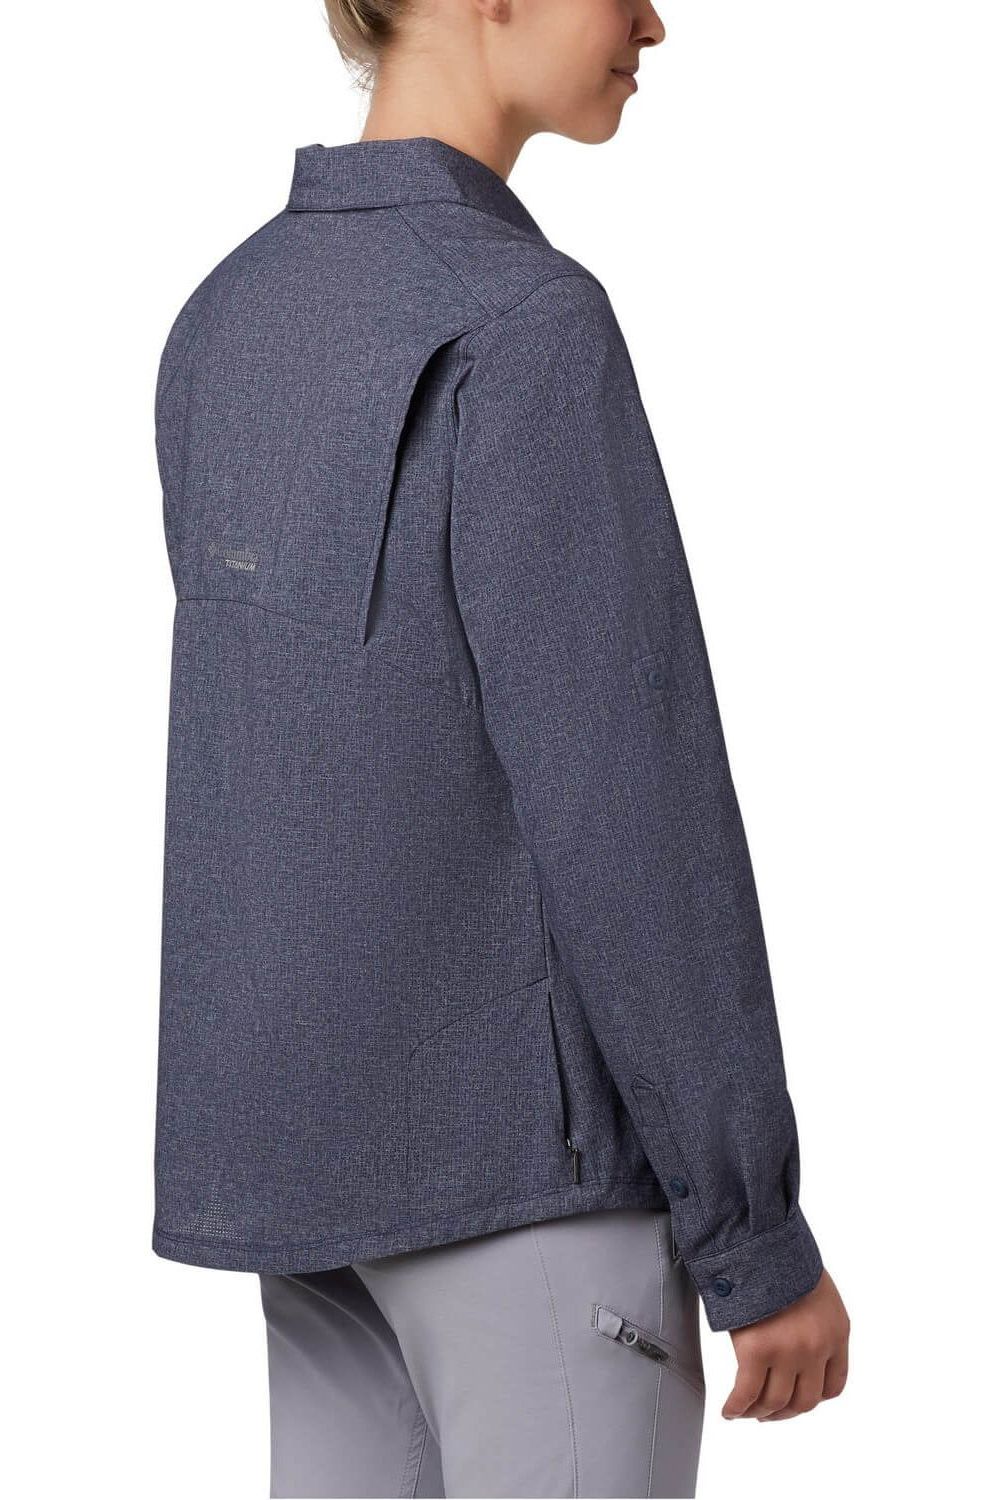 Defective Meander Andes Camasa de dama, Columbia Irico Long Sleeve Shirt, Albastru, XL - eMAG.ro